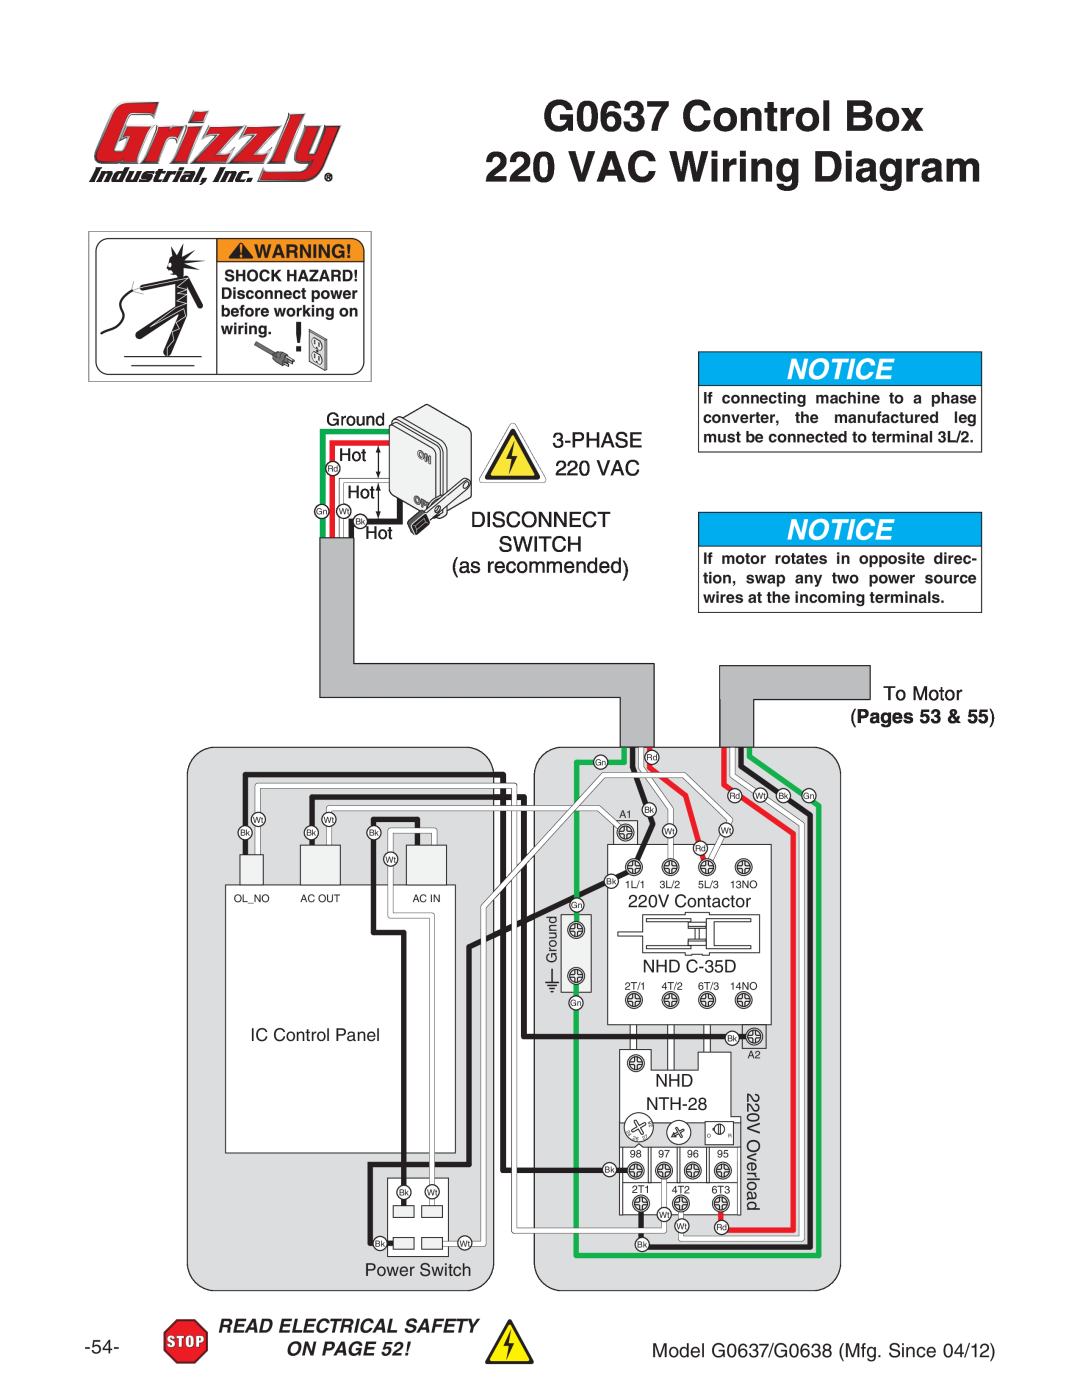 Grizzly G0637 Control Box 220 VAC Wiring Diagram, E=6H  %K68 9 H8DCC 8I HL I8=, VhgZXdbbZcYZY, IdBdidg, =di 